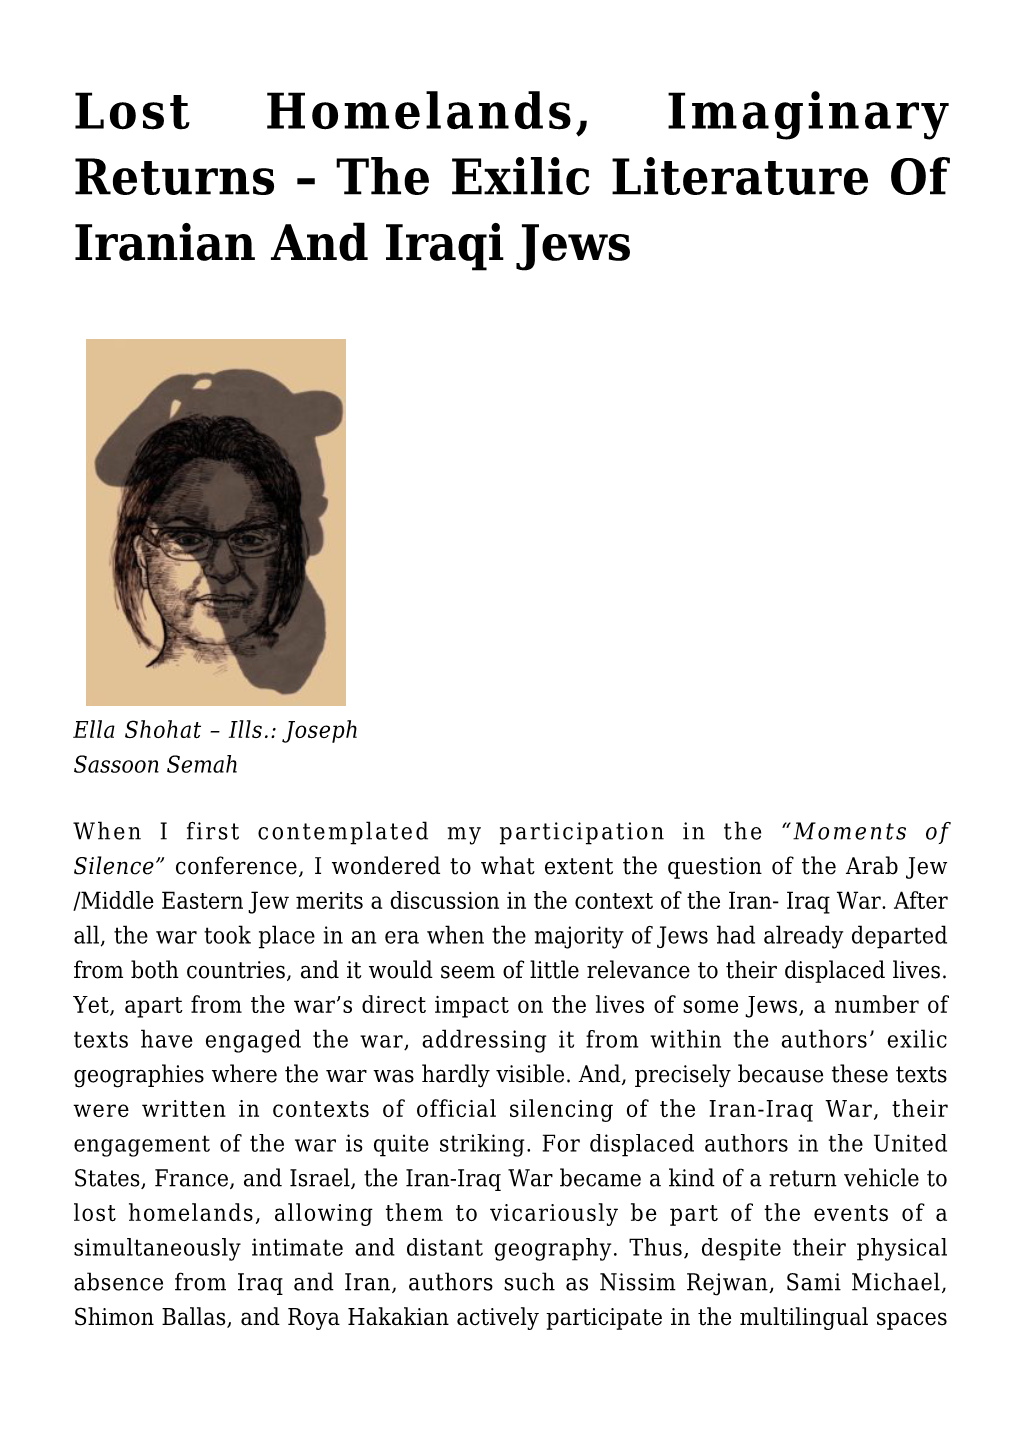 The Exilic Literature of Iranian and Iraqi Jews